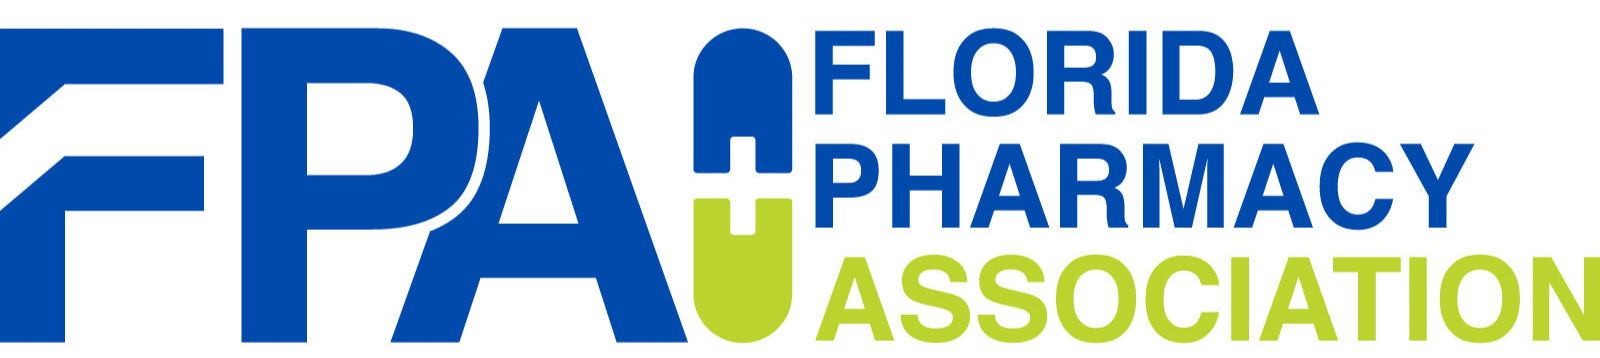 Florida Pharmacy Association